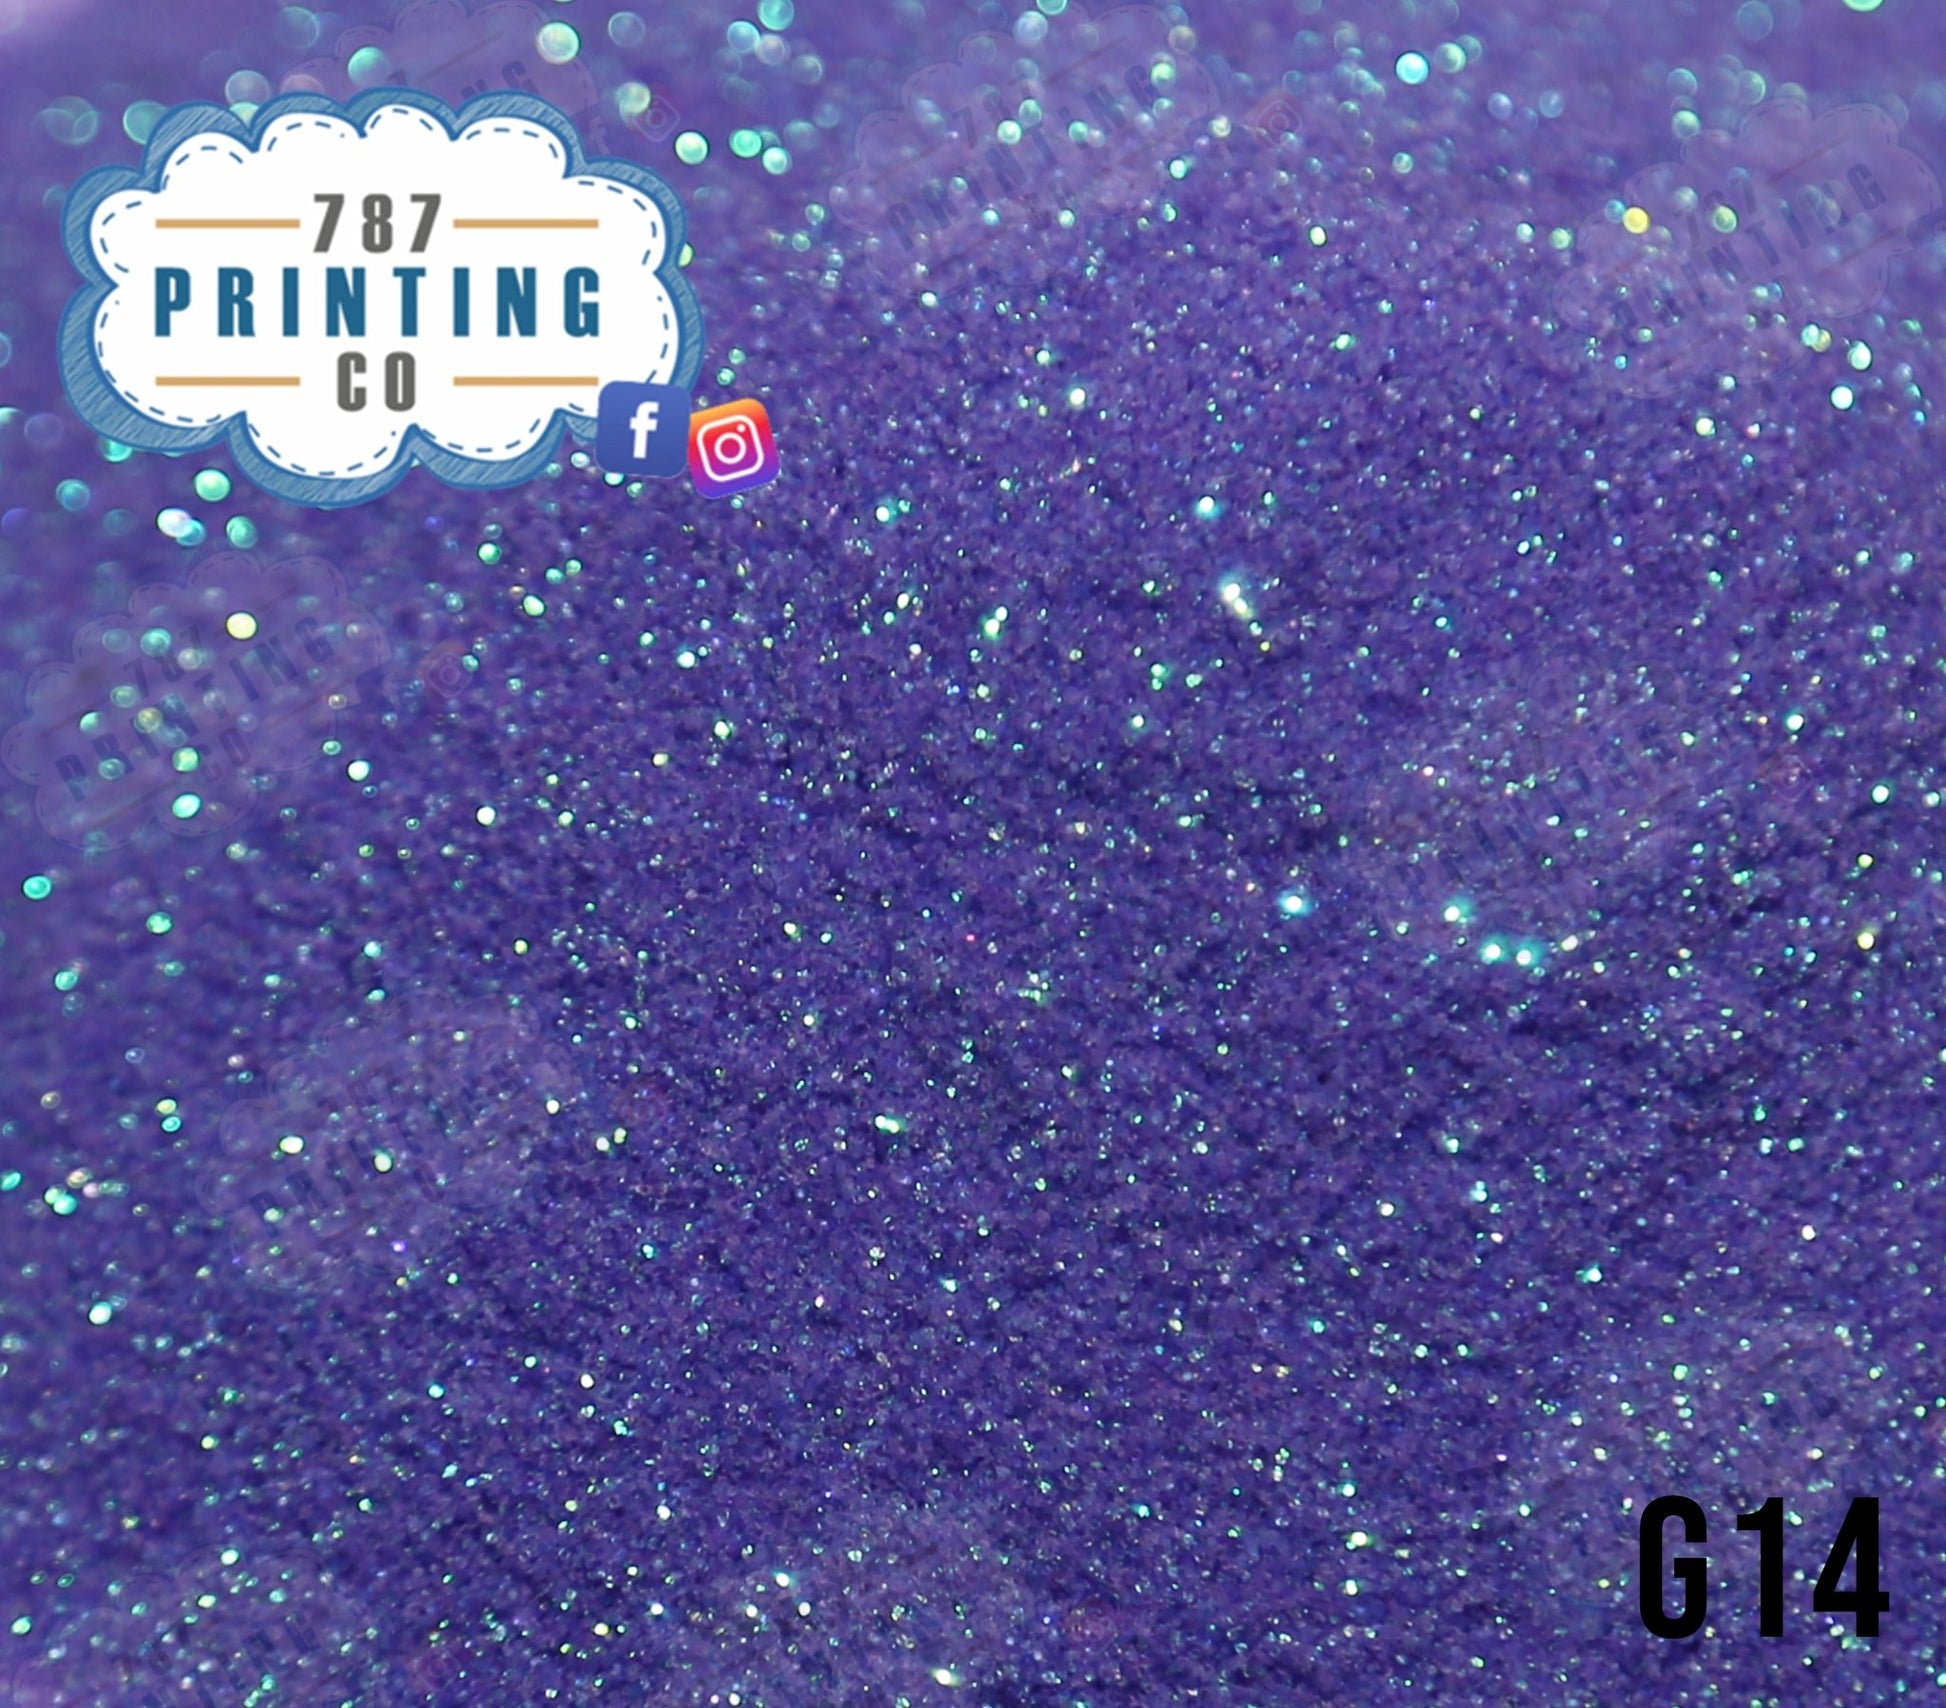 Buyé Ultra Fine Glitter 1/128 (G14) - 787 Printing Co.